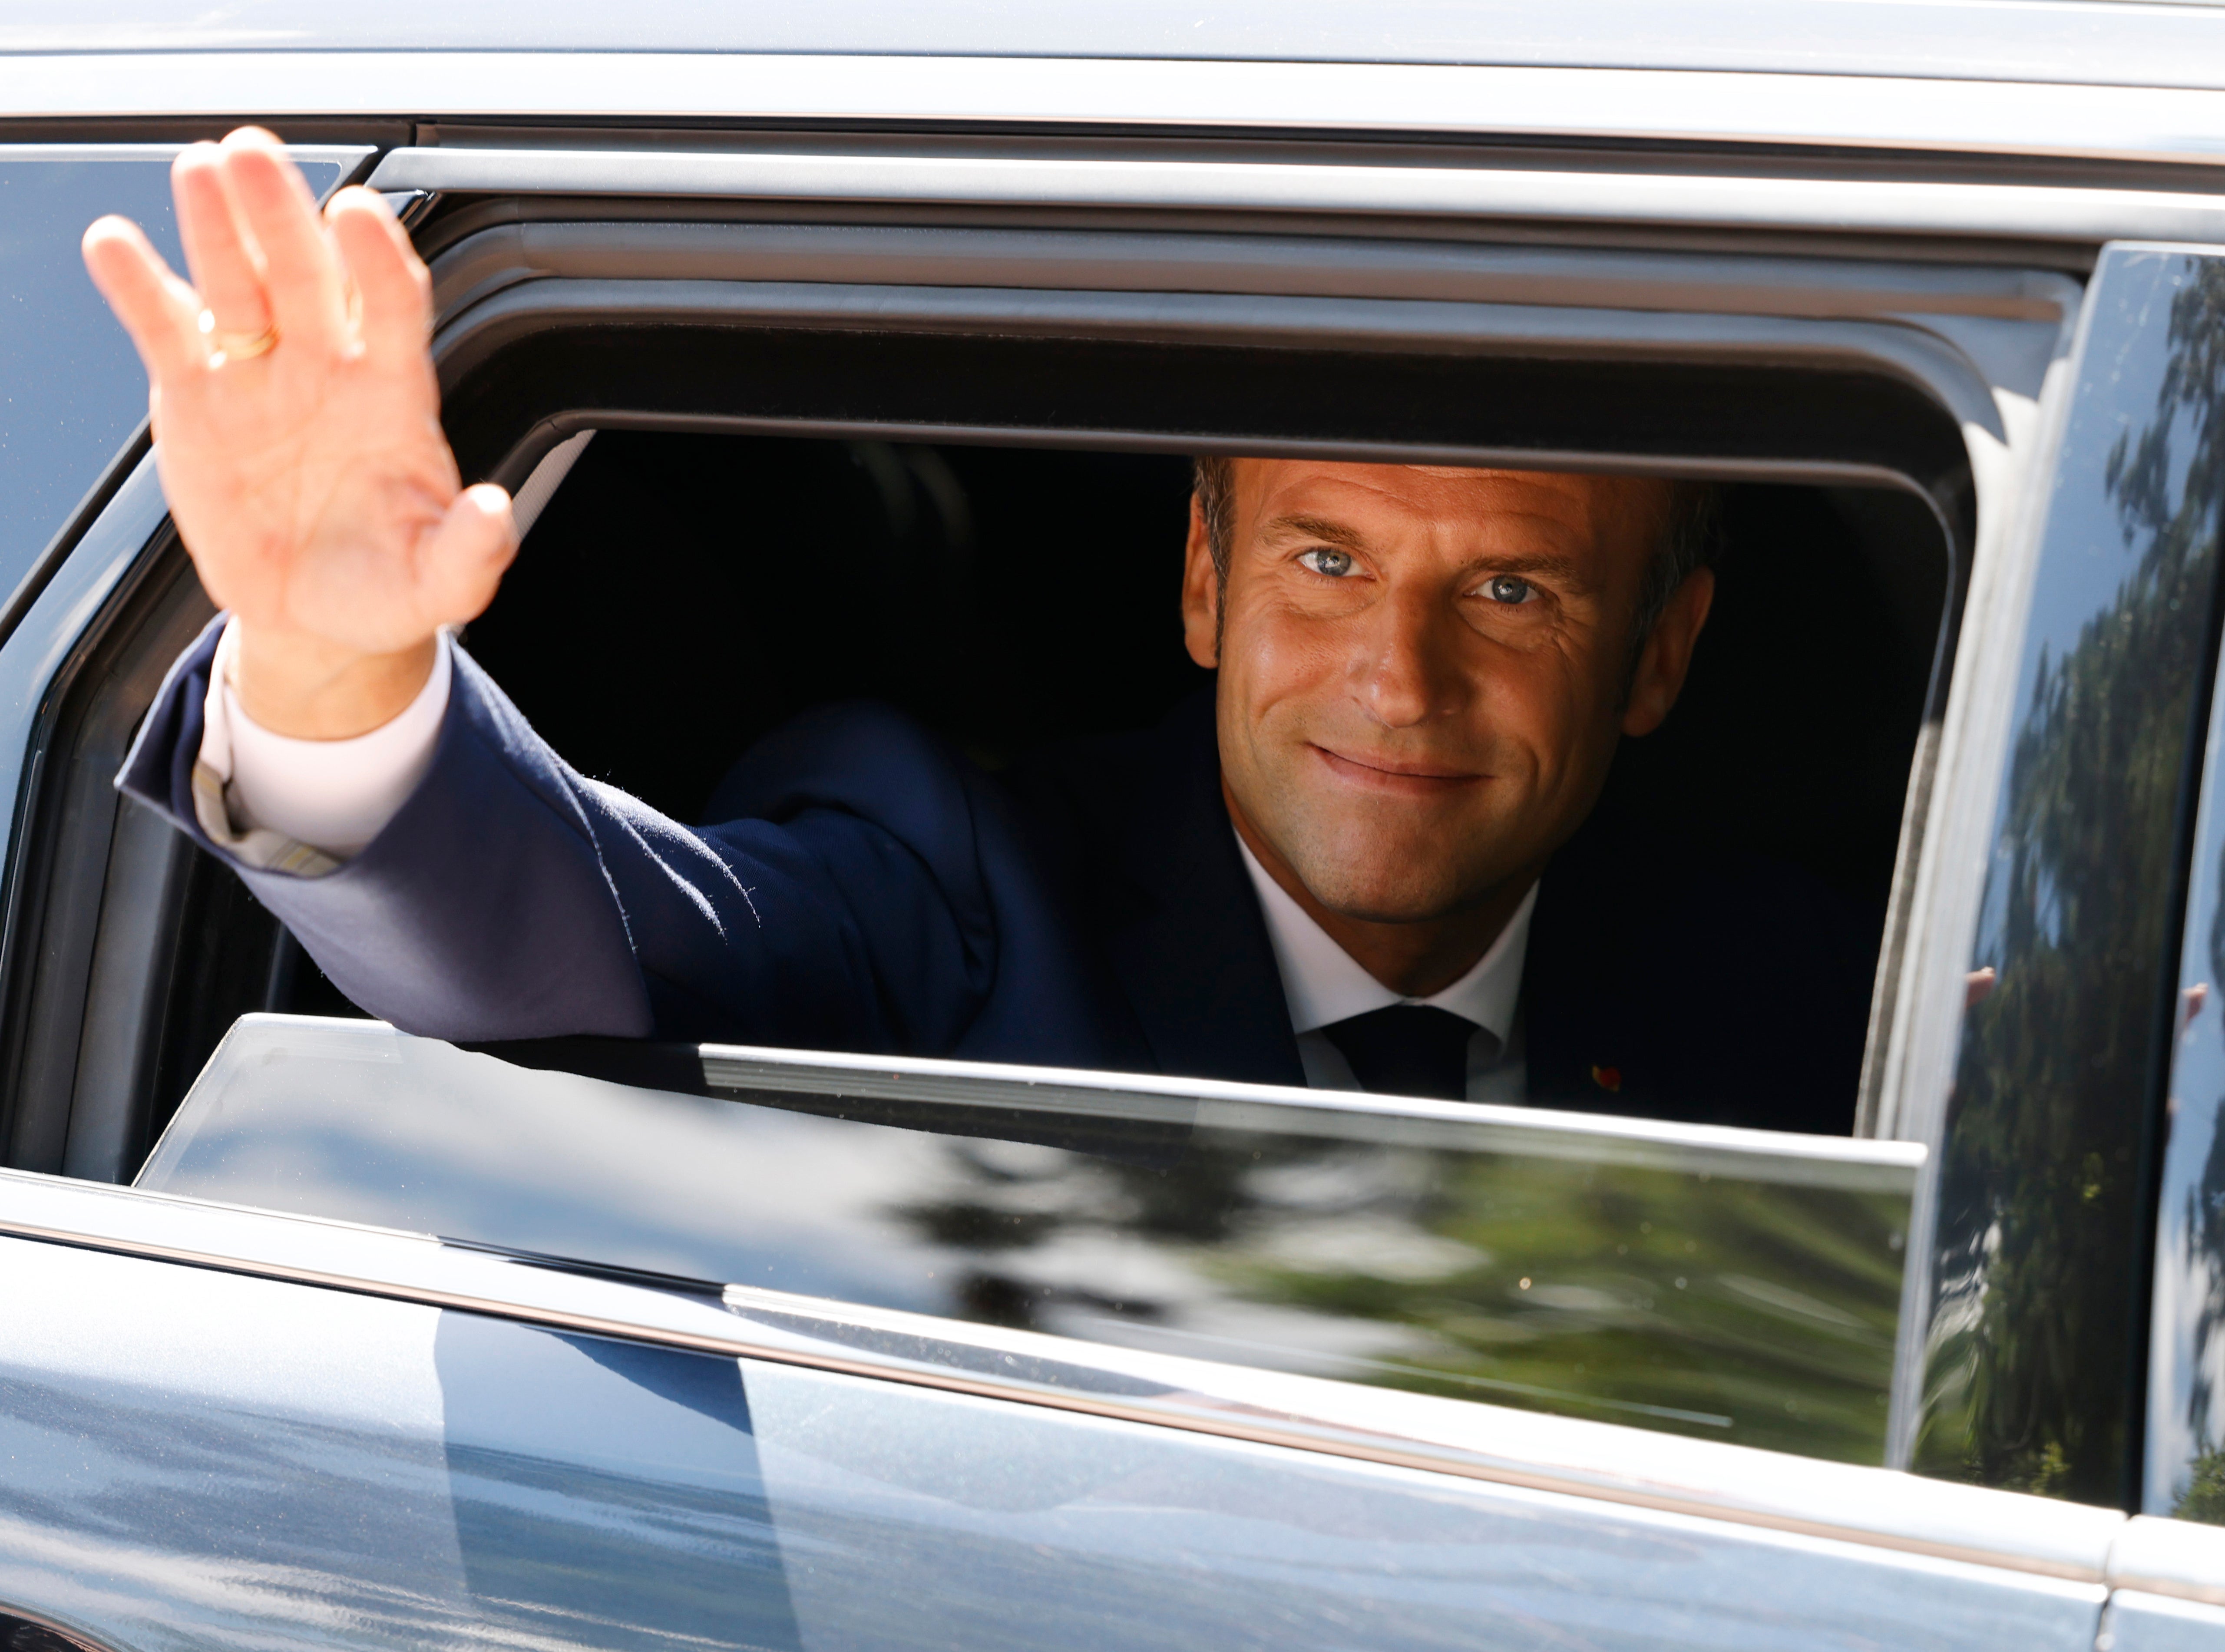 Emmanuel Macron: waving goodbye to a parliamentary majority?